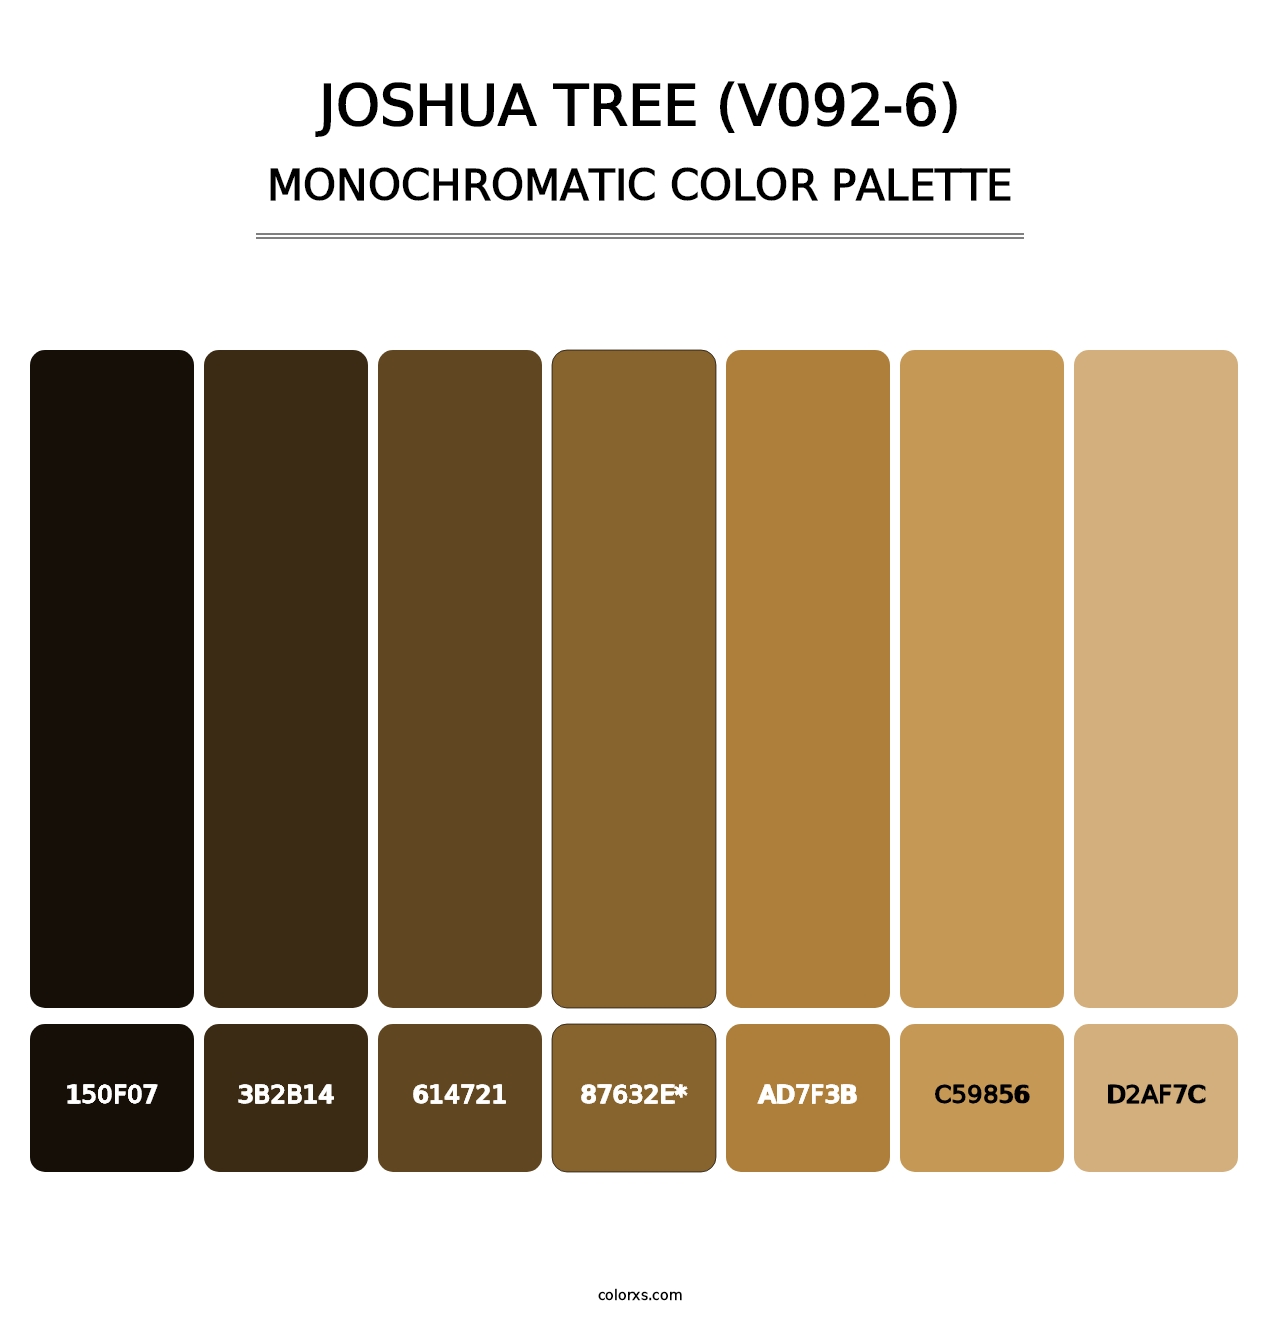 Joshua Tree (V092-6) - Monochromatic Color Palette